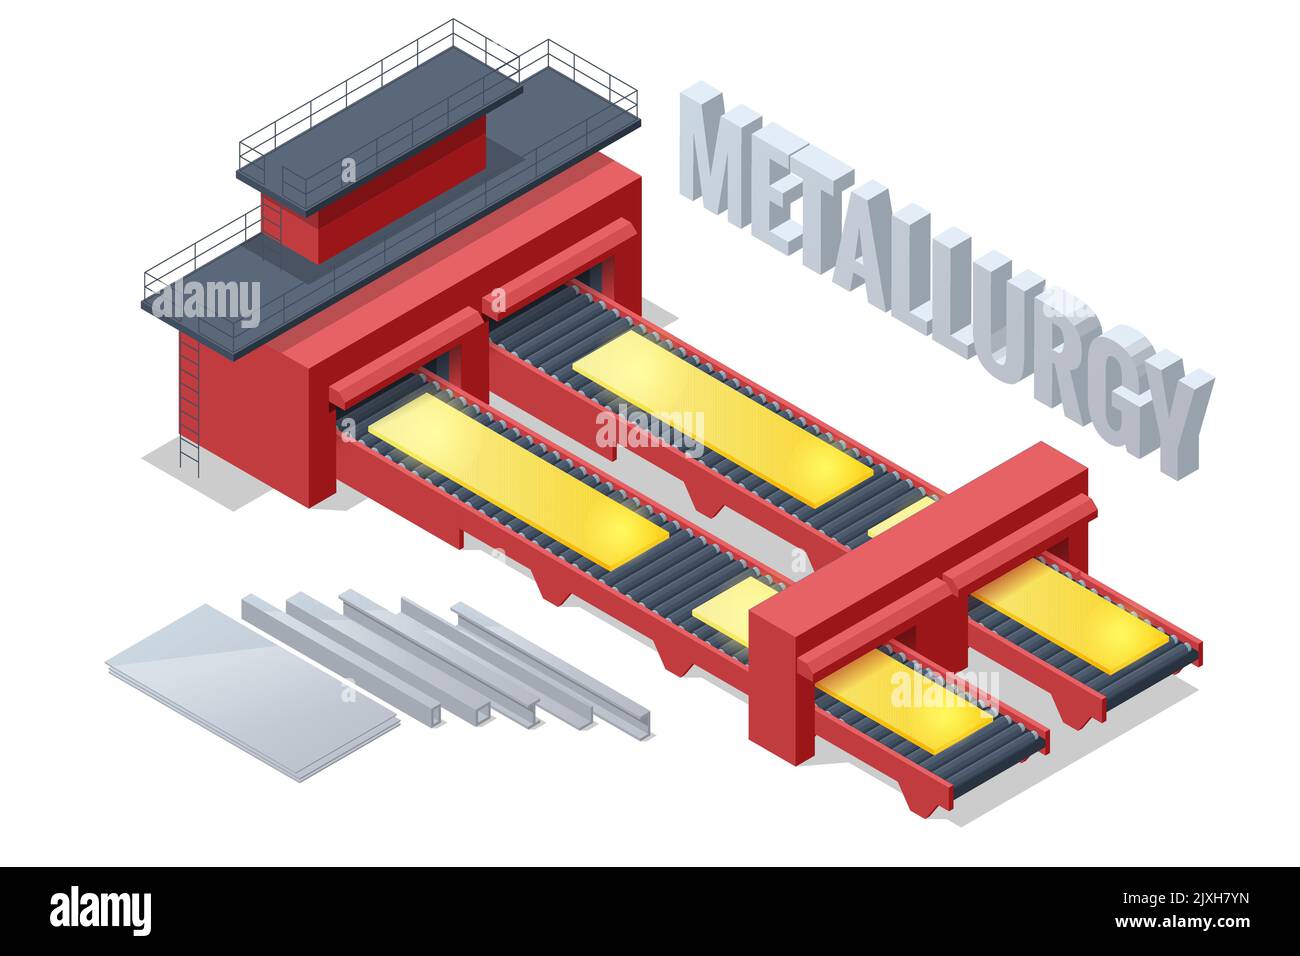 Isometric Metal Industry Plant. Steel and Iron Metallurgy Industry Technologies Stock Vector